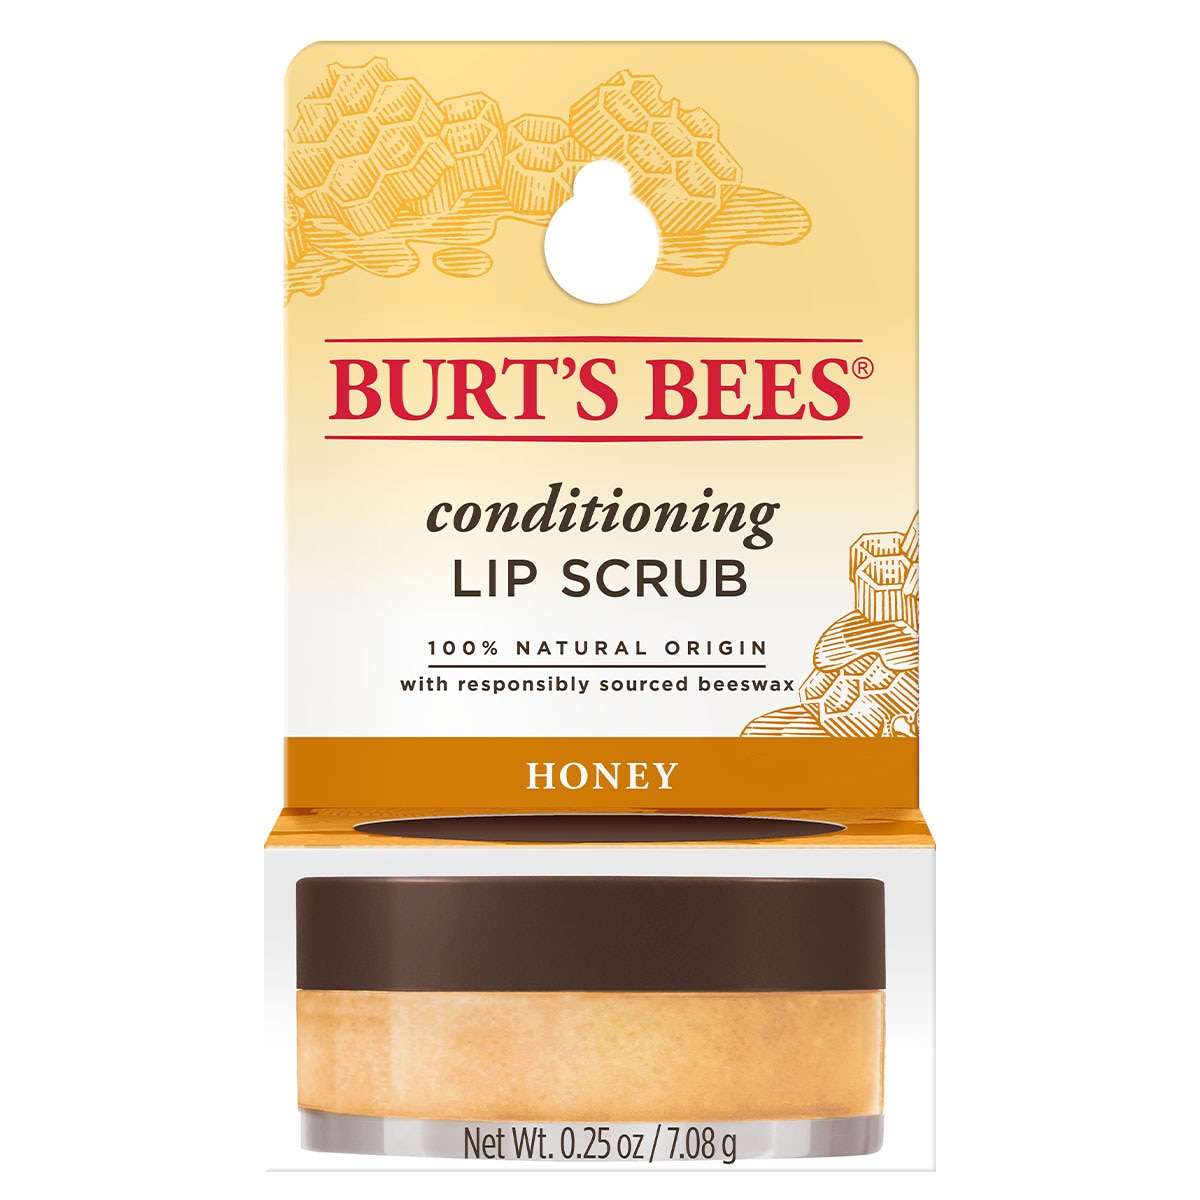 Burts Bees Conditioning Lip Scrub 7.08g